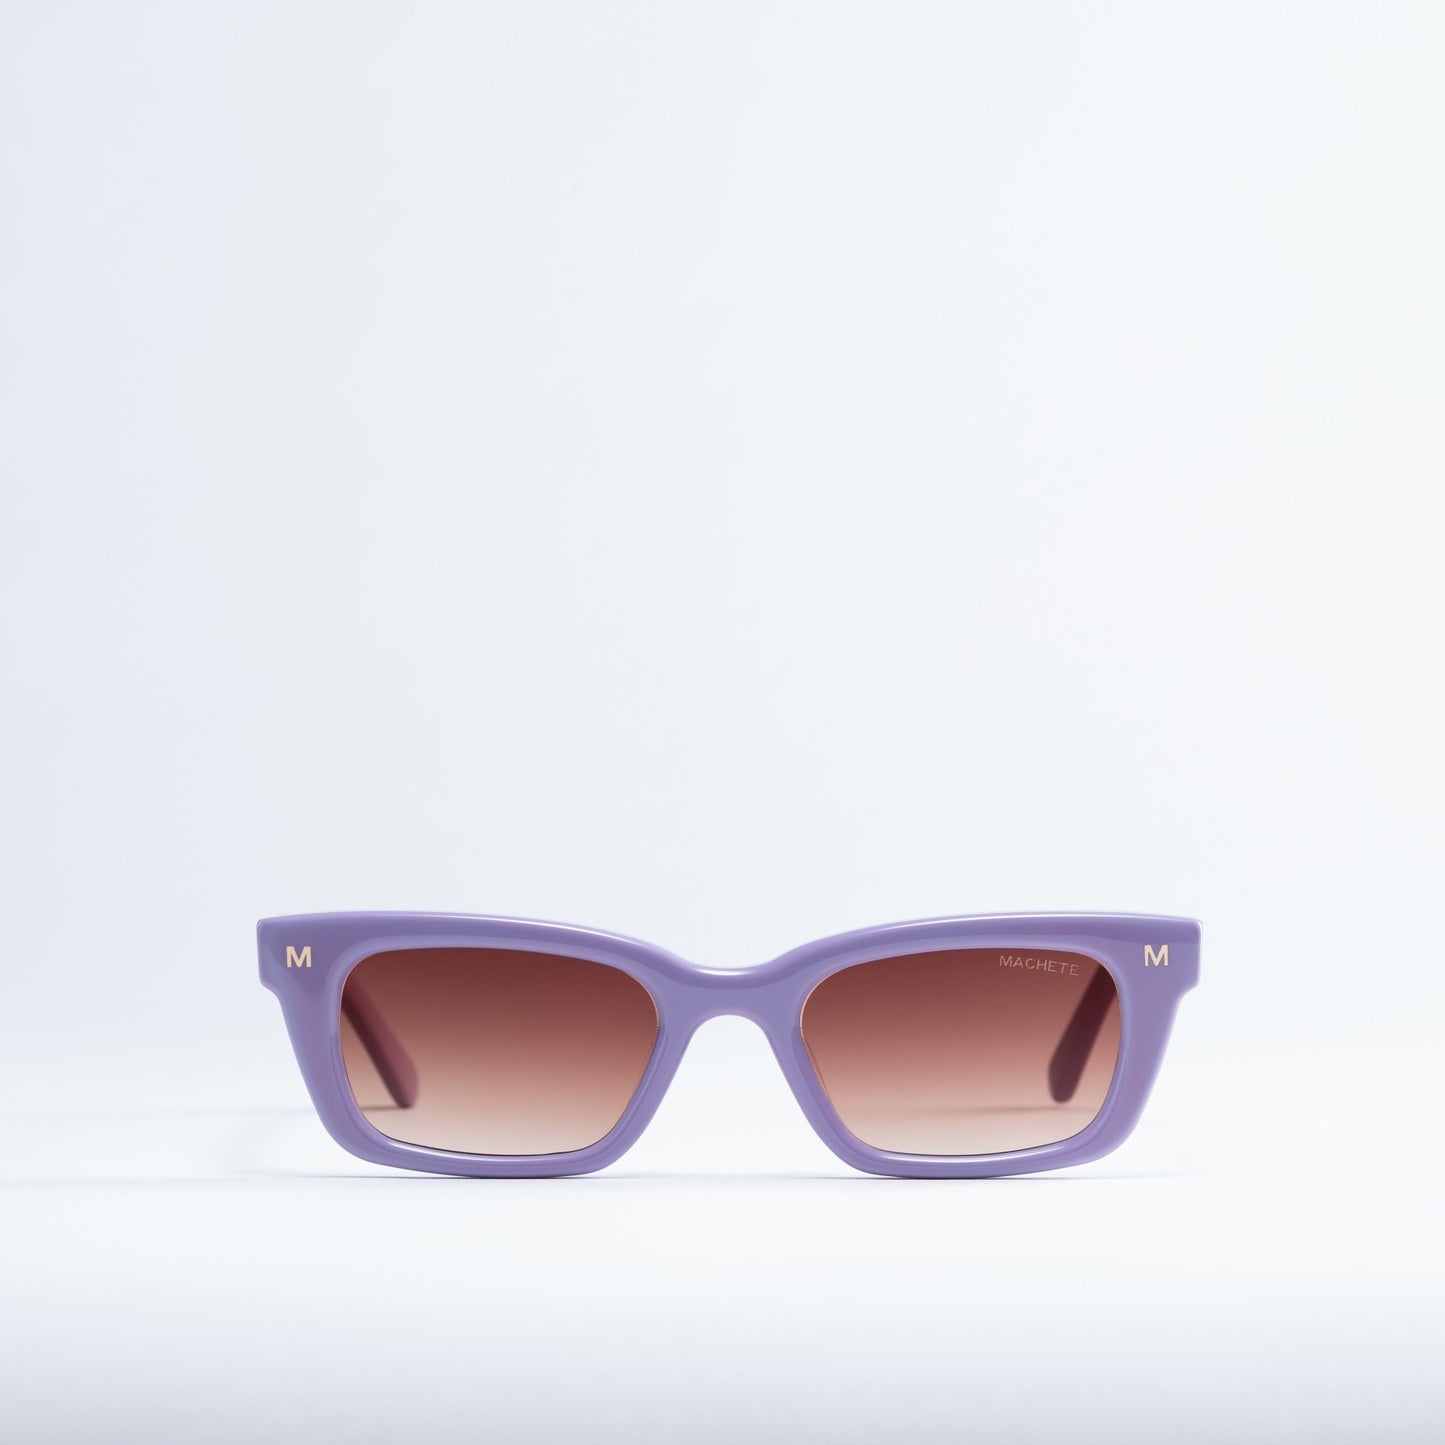 MACHETE Ruby Sunglasses in Violet